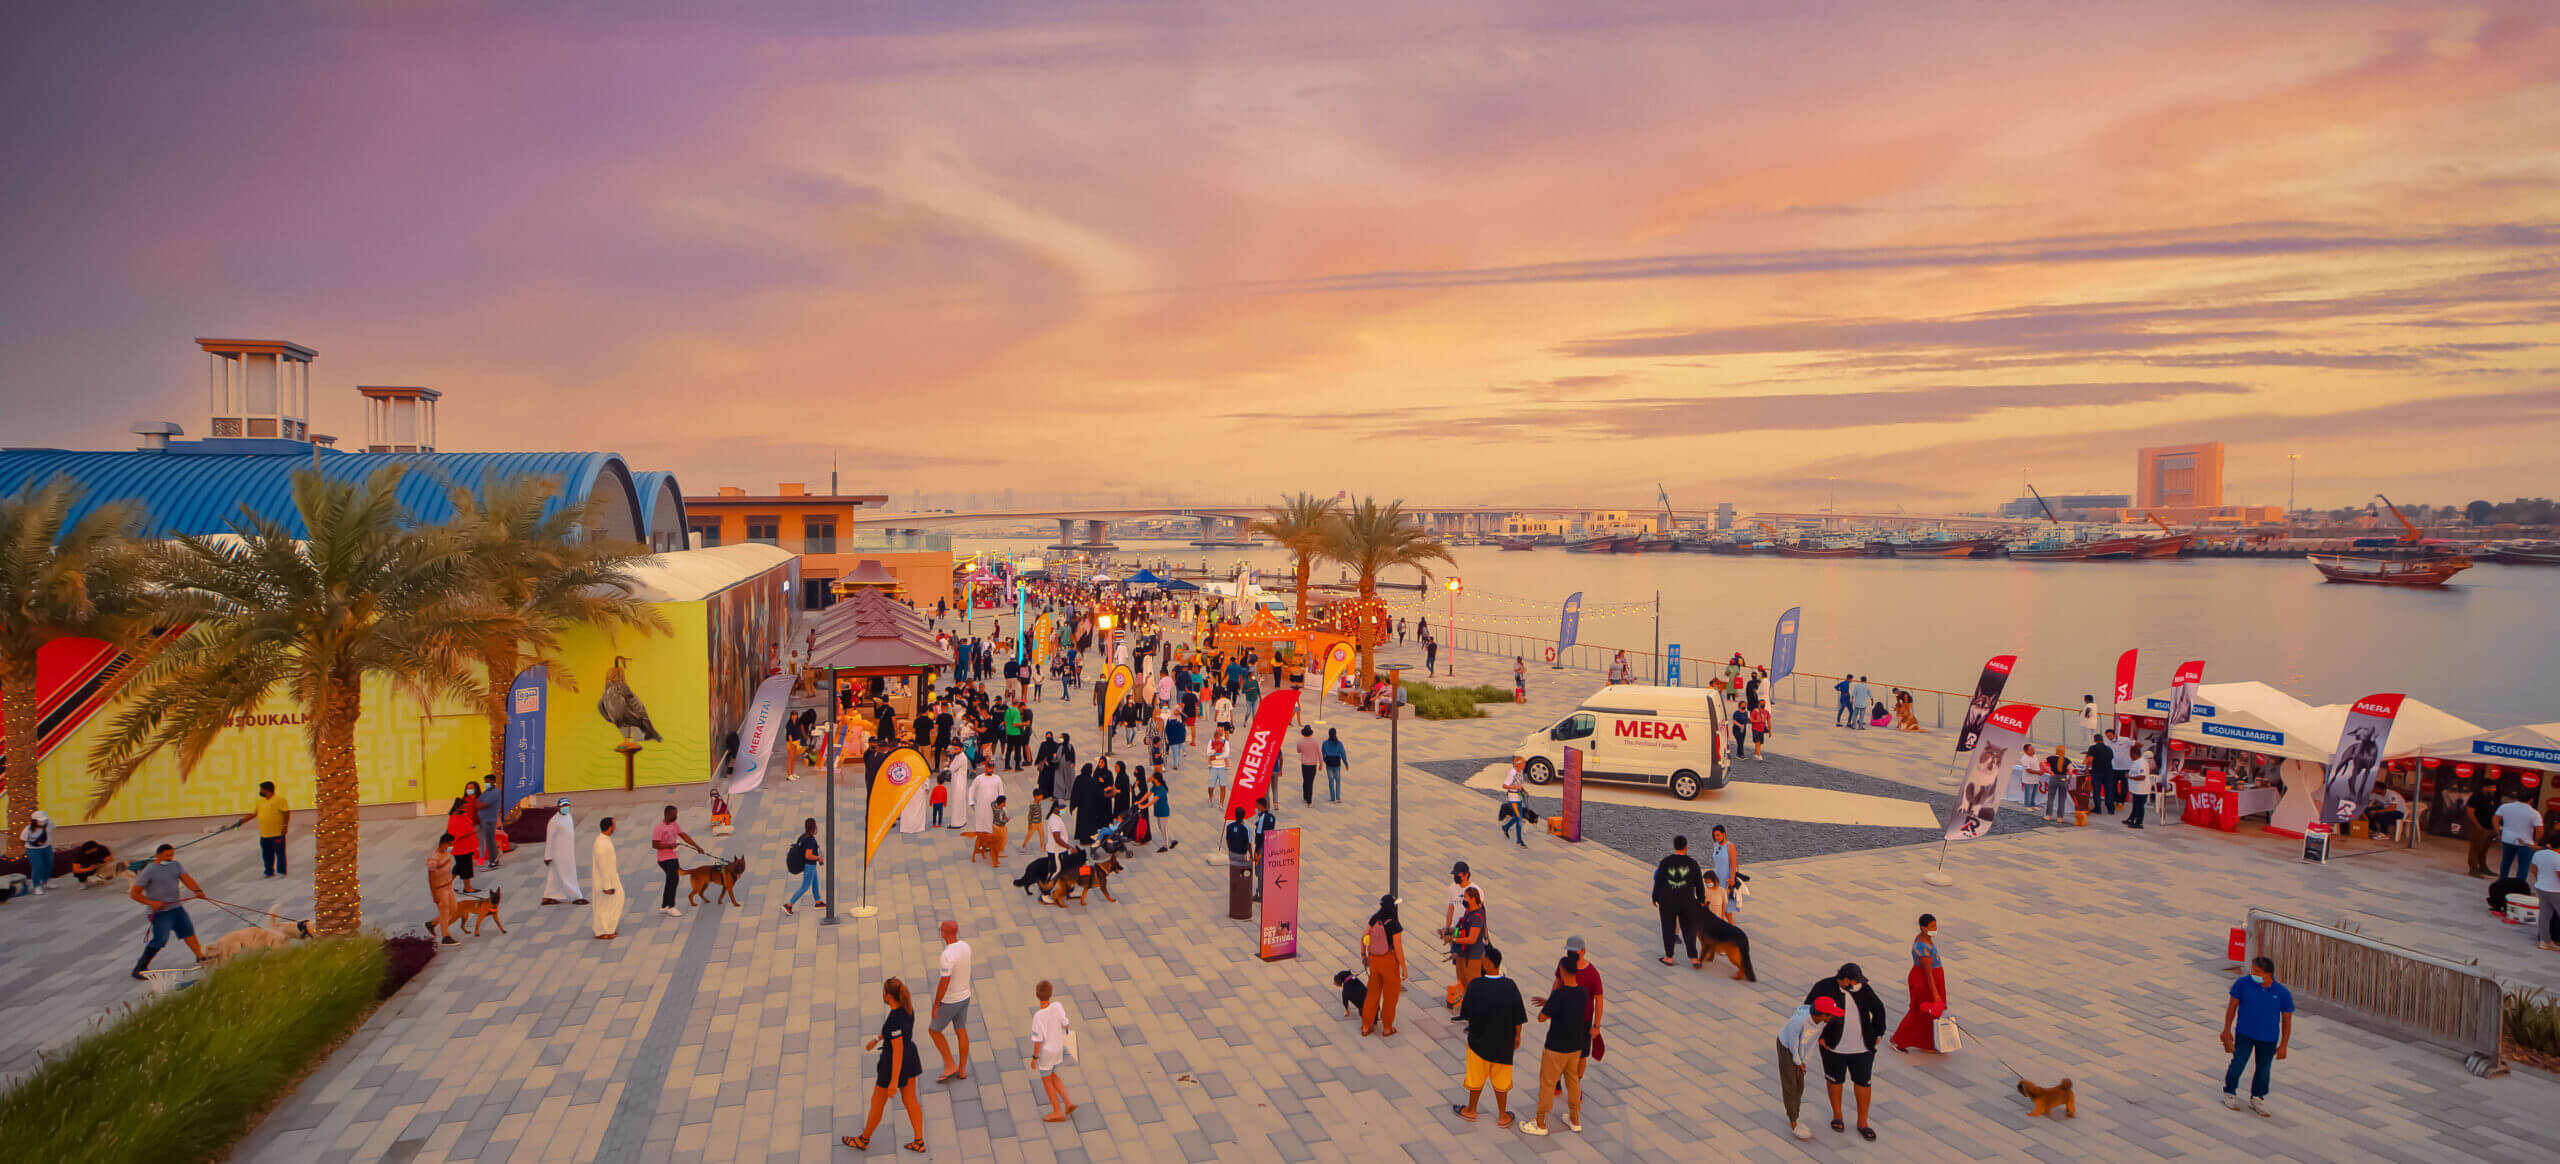 An Overview of Souk Al Marfa Dubai